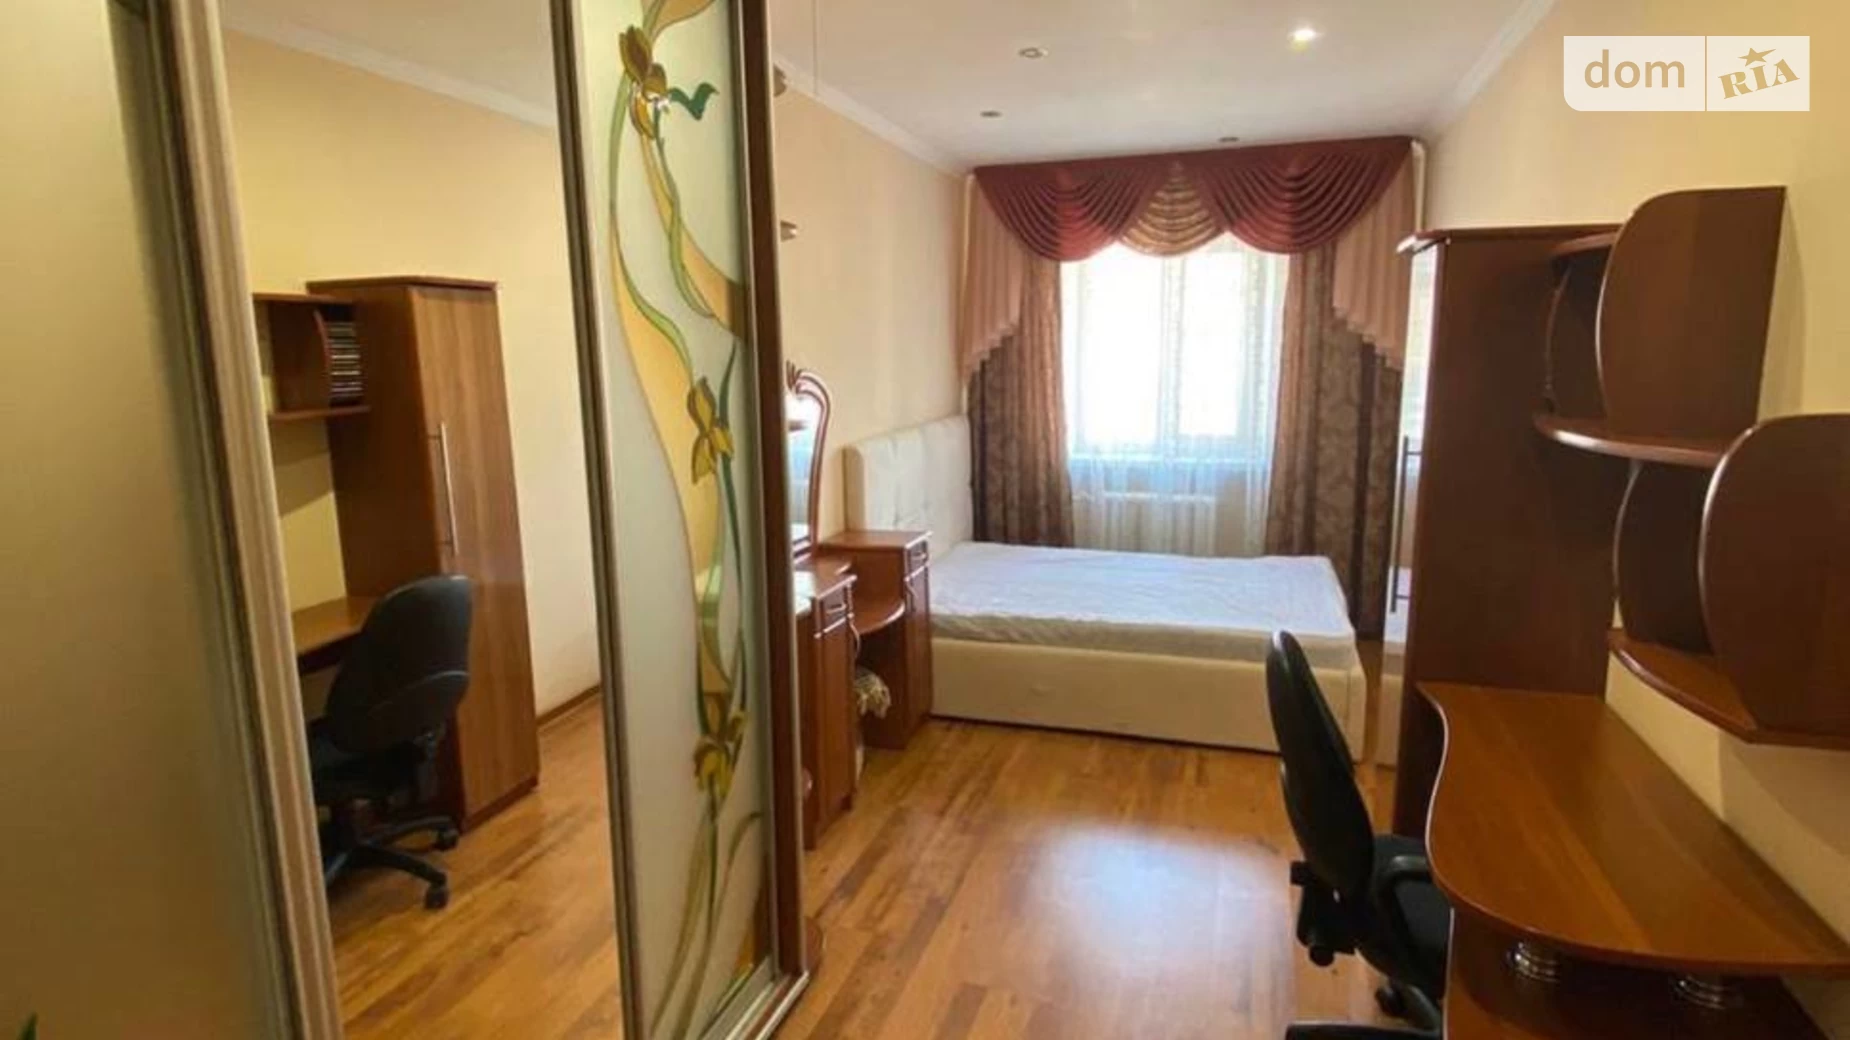 Продается 2-комнатная квартира 45.15 кв. м в Ивано-Франковске - фото 3